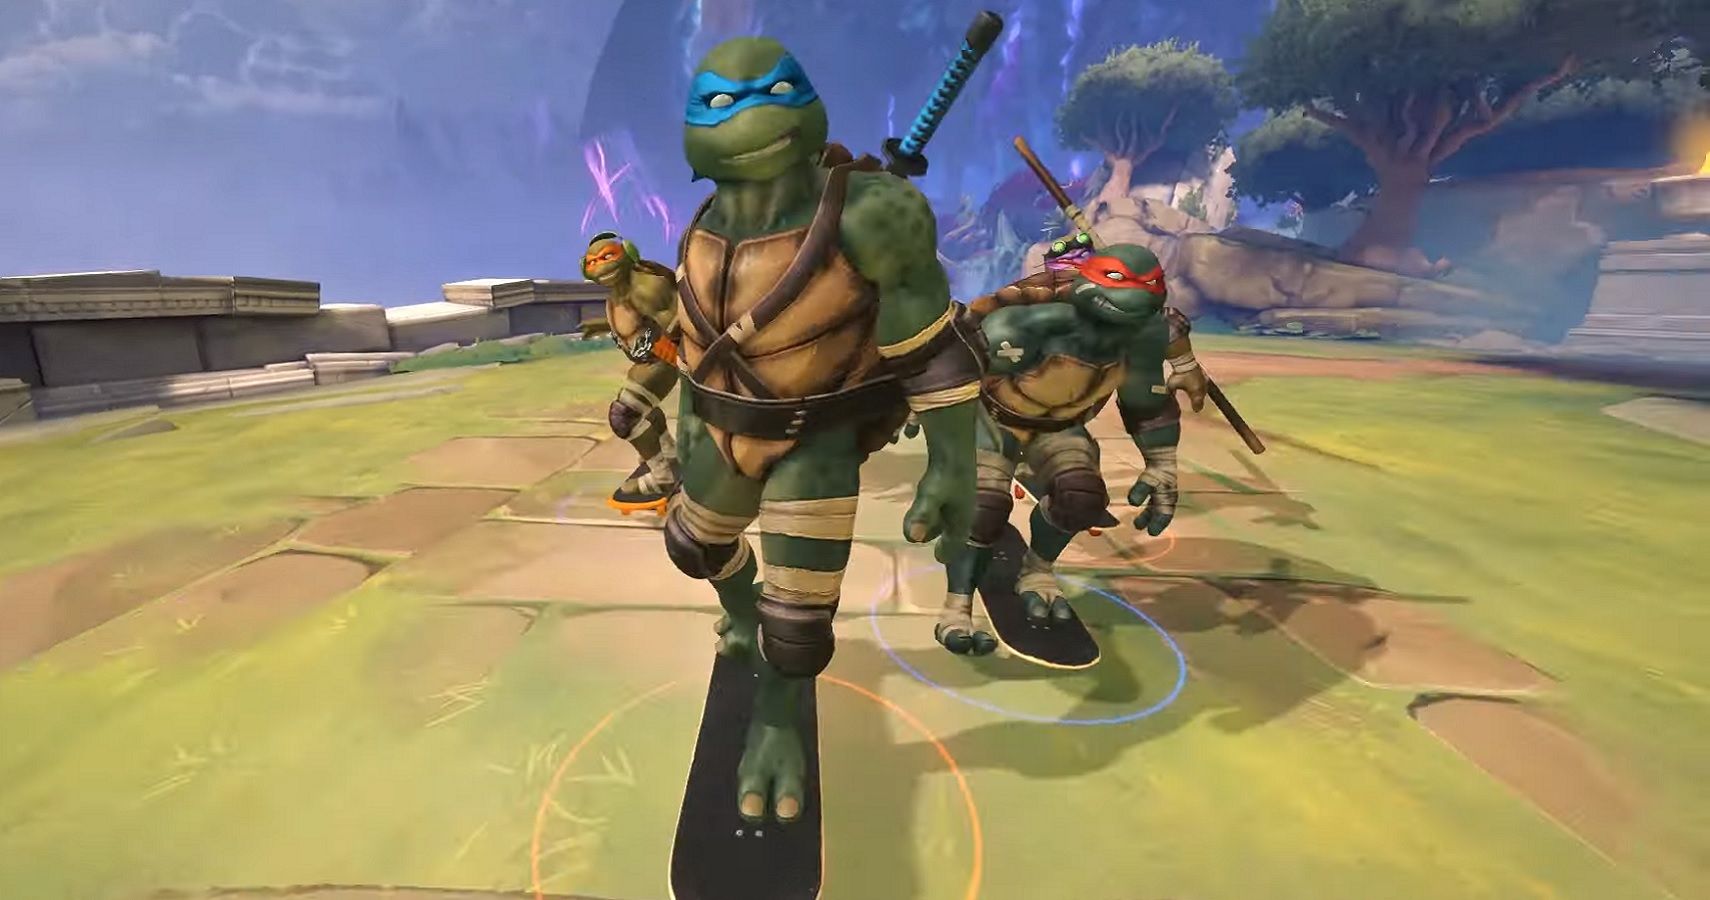 Cowabunga! The Teenage Mutant Ninja Turtles Join Smite